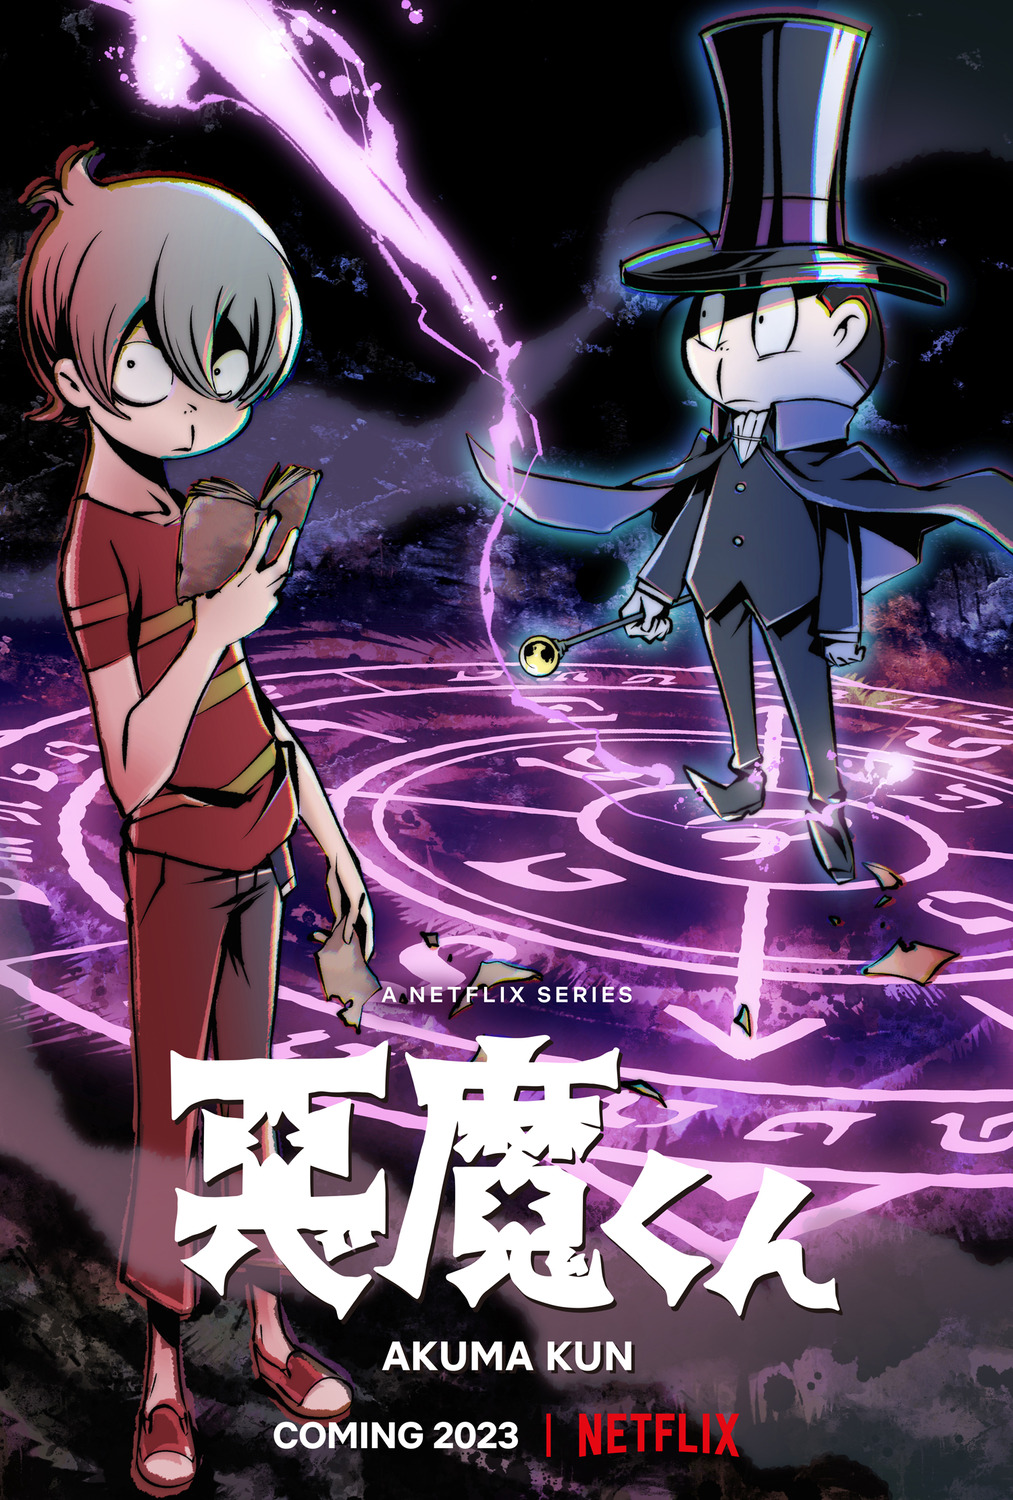 Extra Large TV Poster Image for Akuma-kun (#1 of 4)